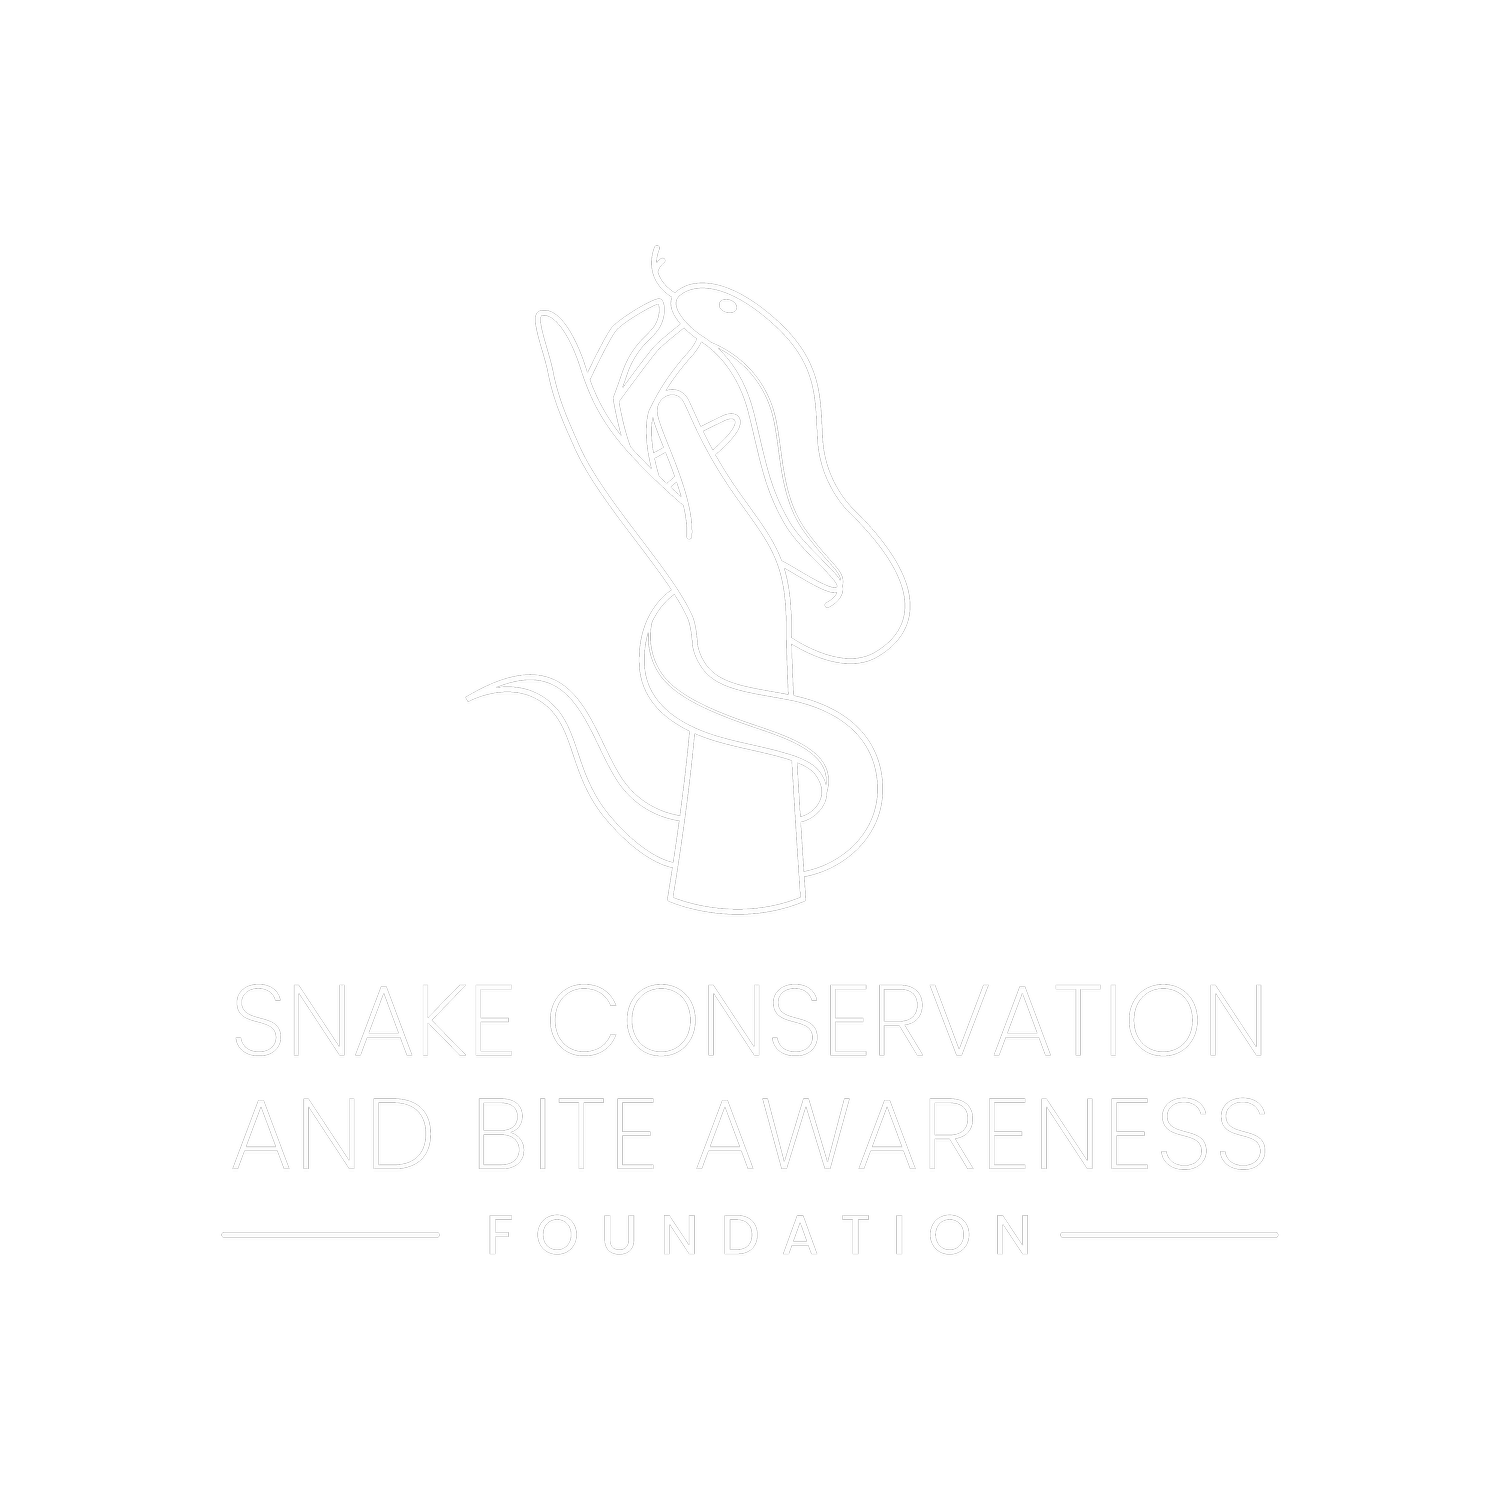 Snake Conservation and Bite Awareness Foundation